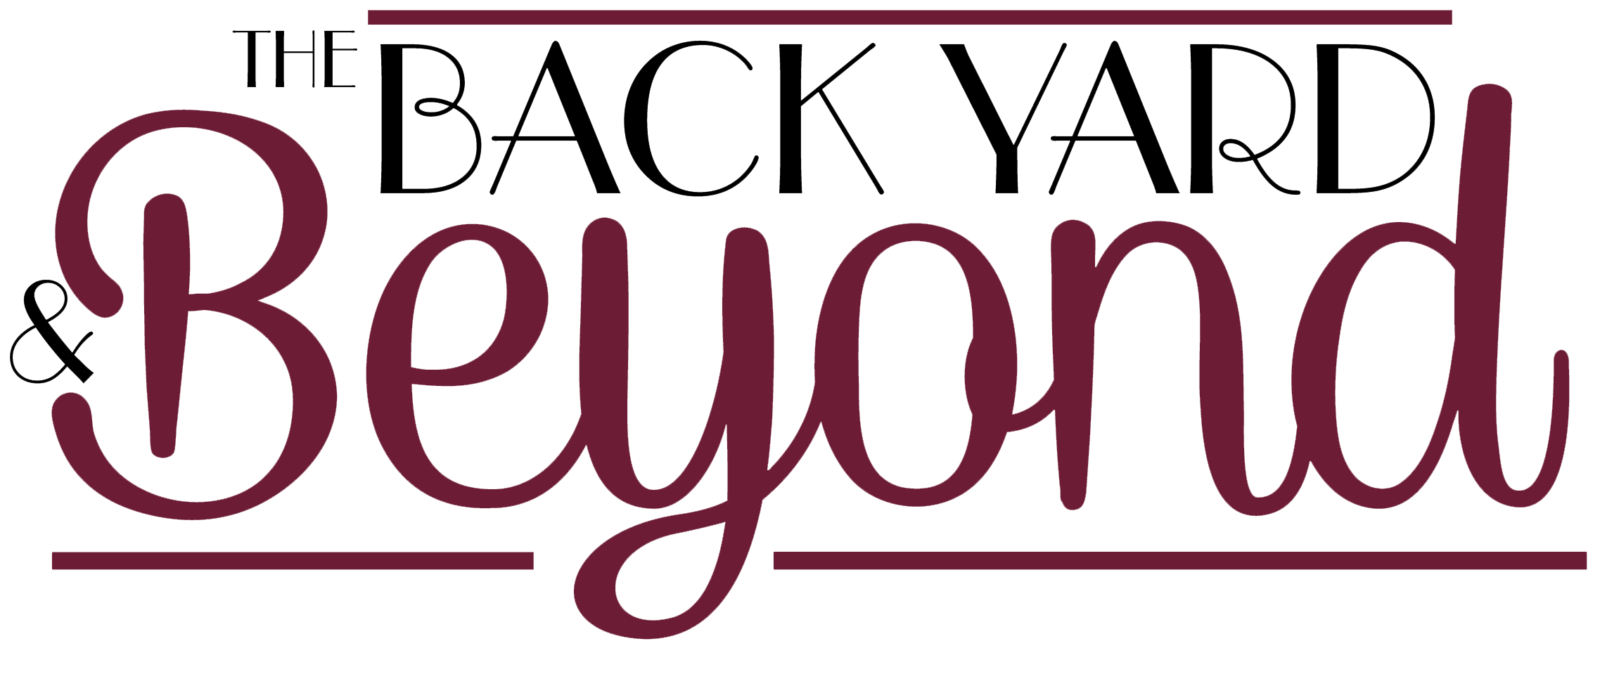 backyard beyond logo